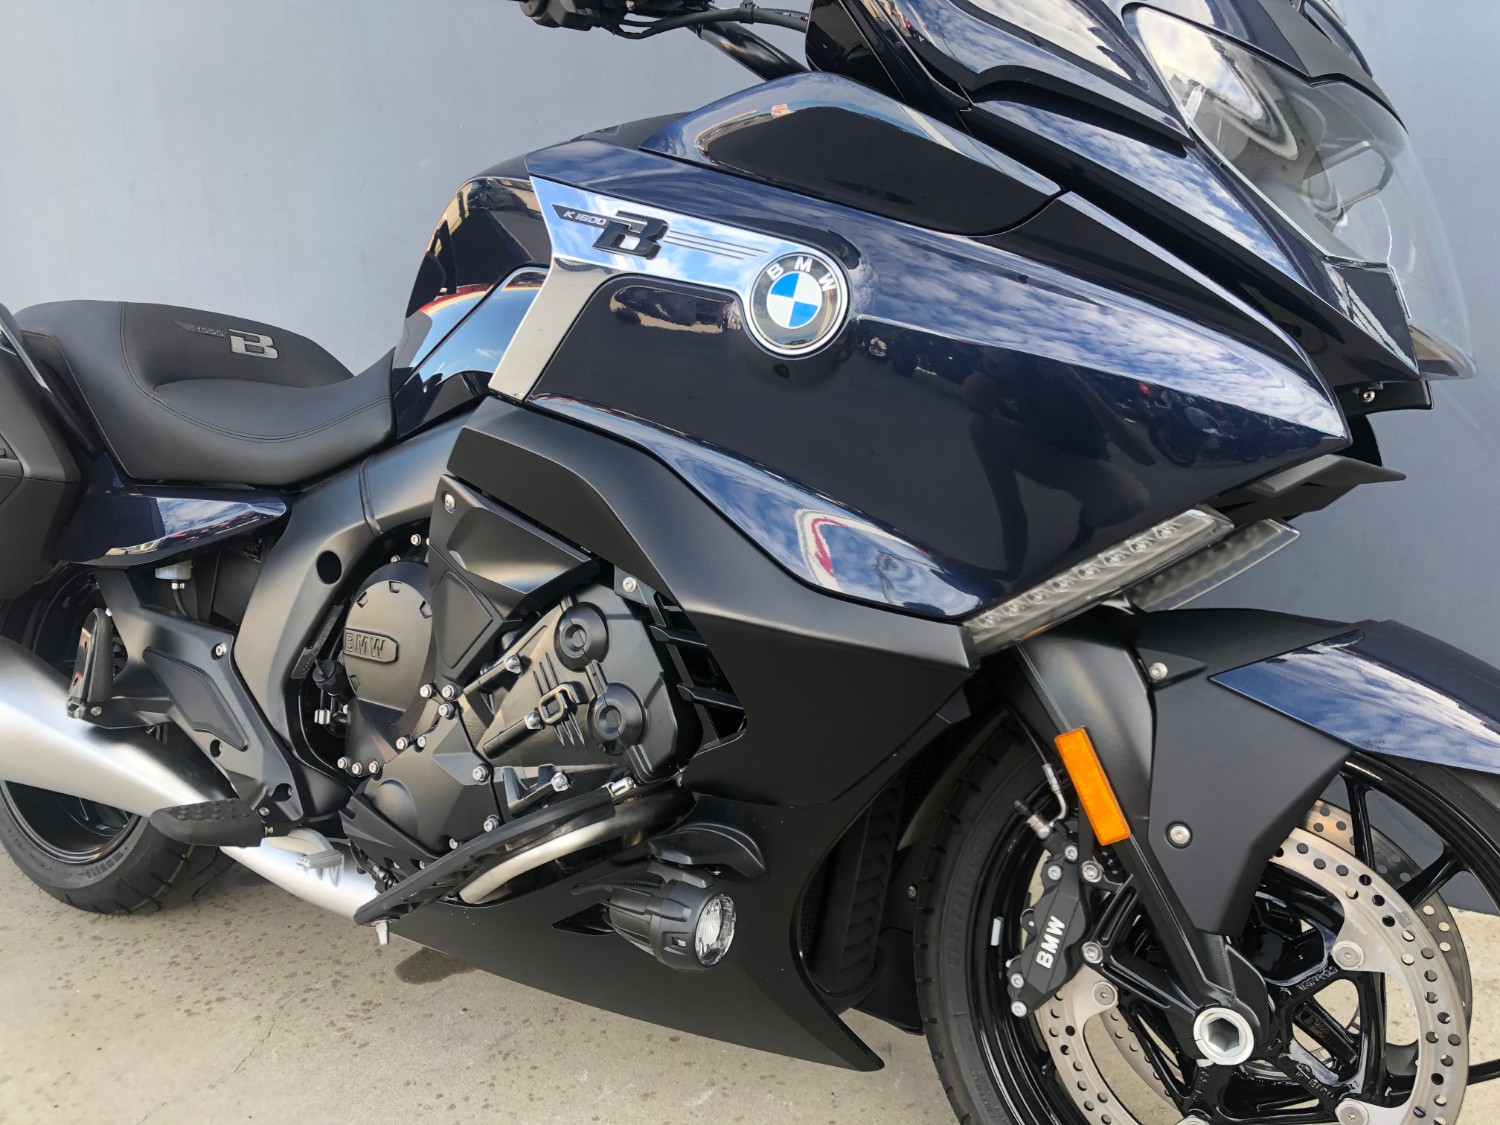 2019 BMW K1600 B Deluxe Motorcycle Image 19